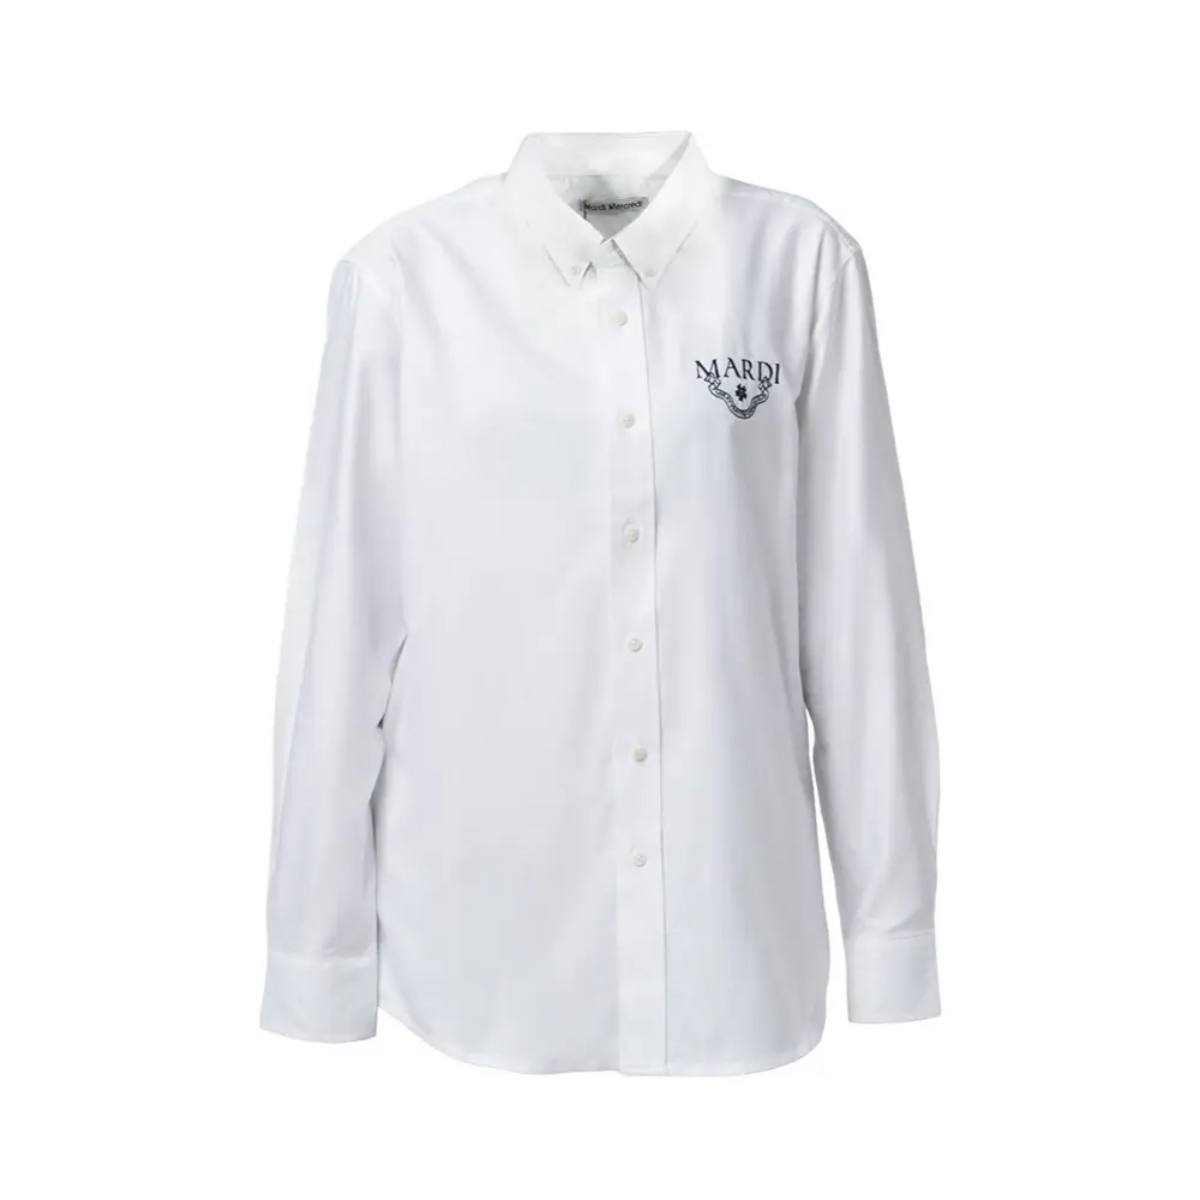 Mardi Mercredi Oxford Shirt Alumni Classique White Black